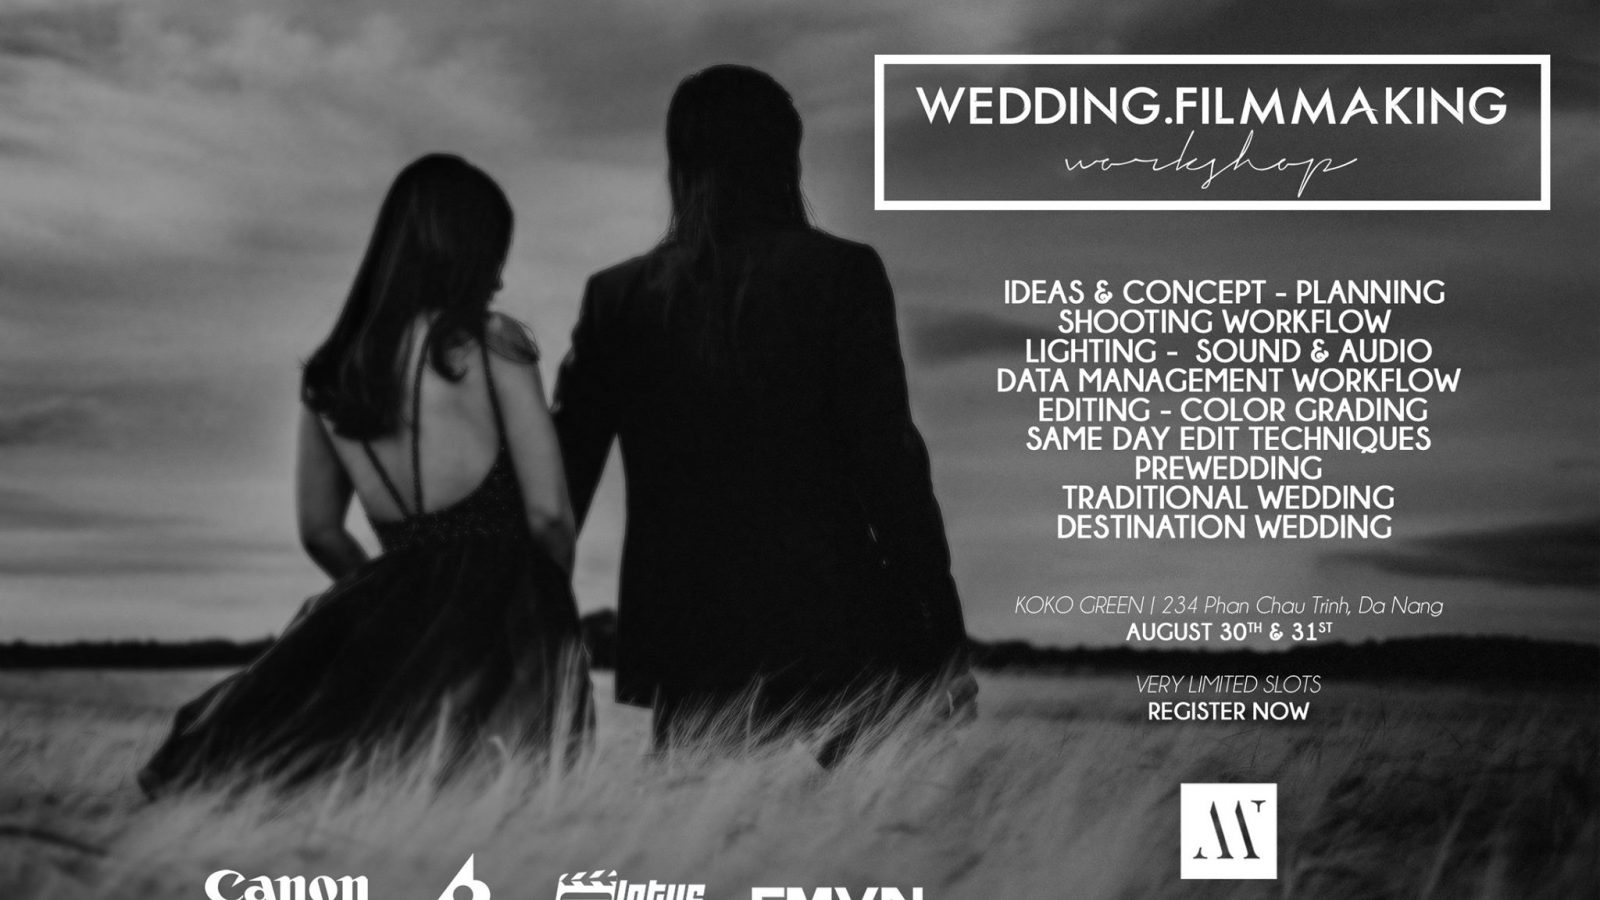 Wedding Filmmaking Workshop By Moc Nguyen | 50mm Vietnam